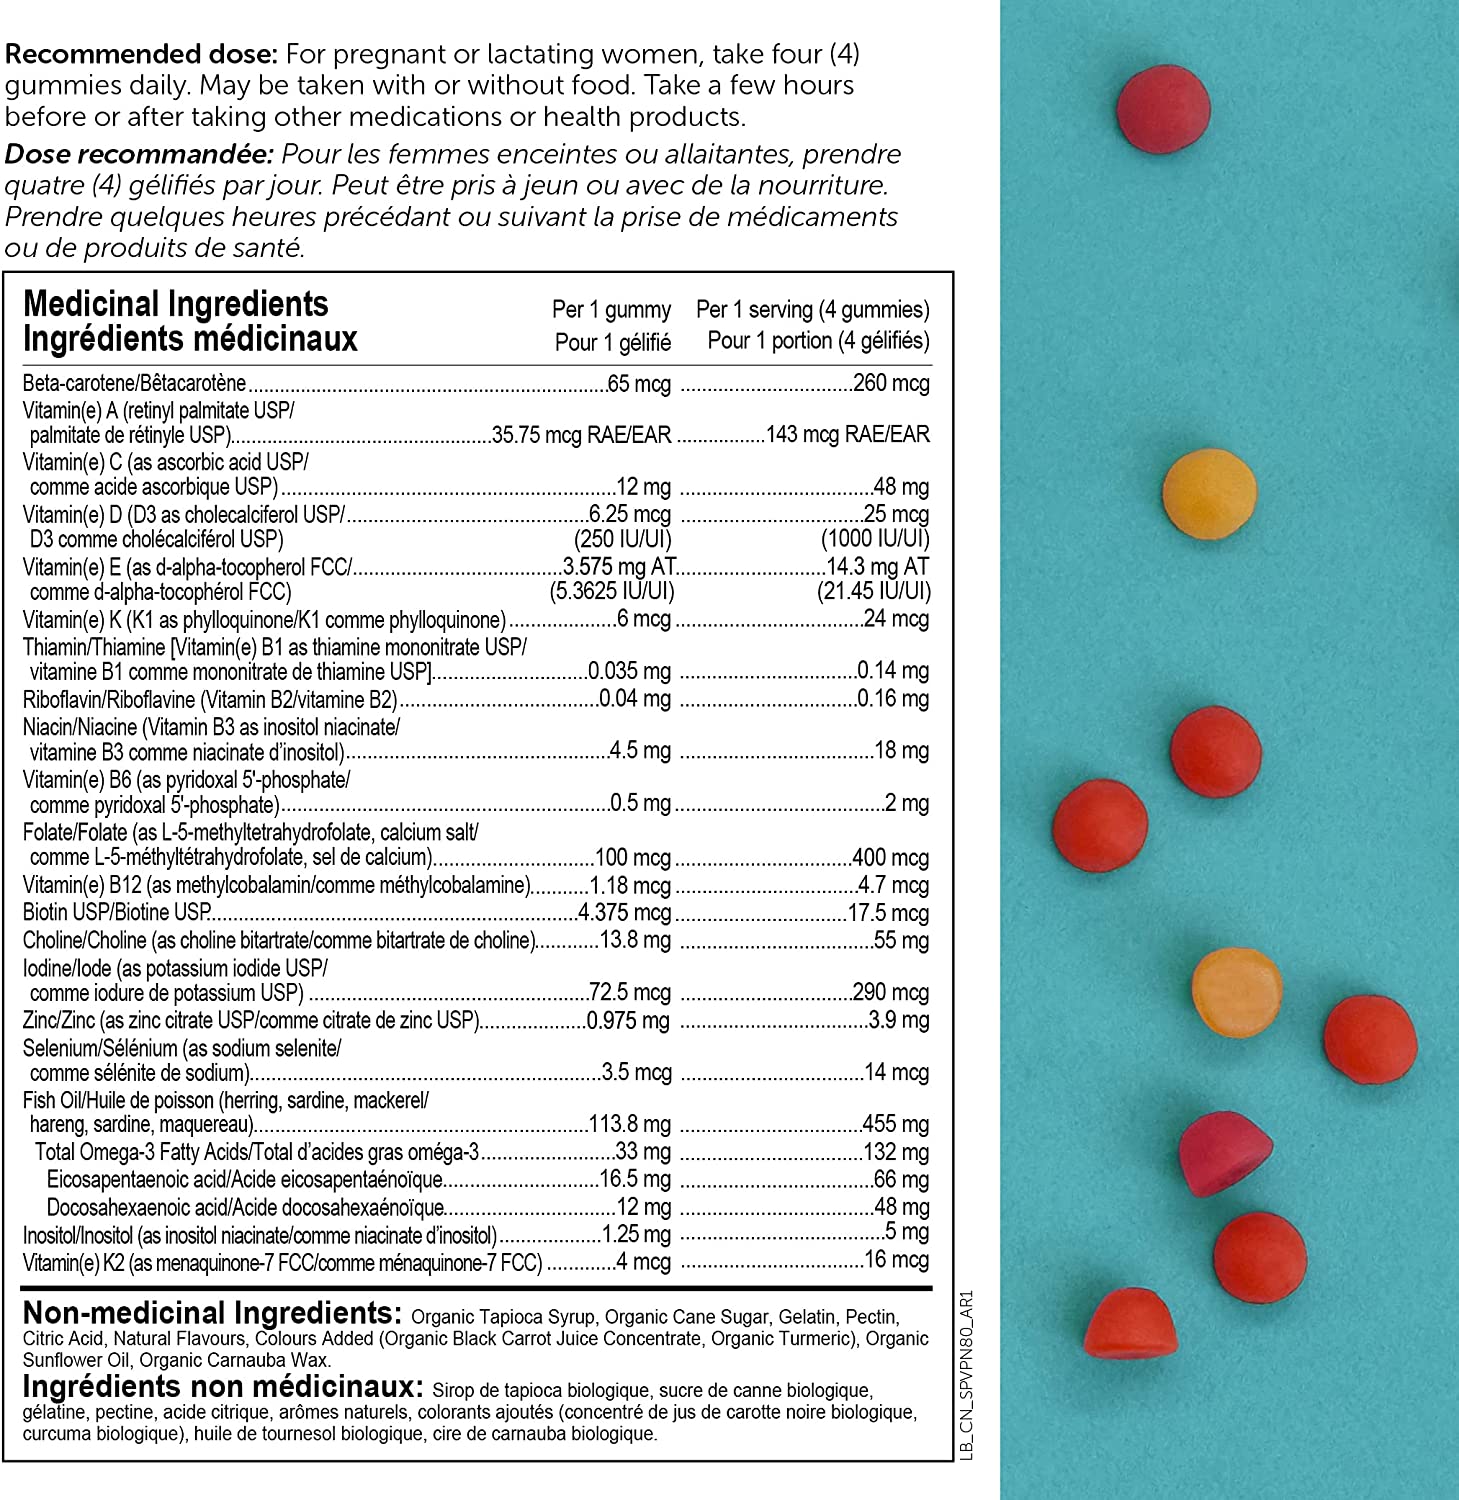 SmartyPants Prenatal Formula (120 Gummies)